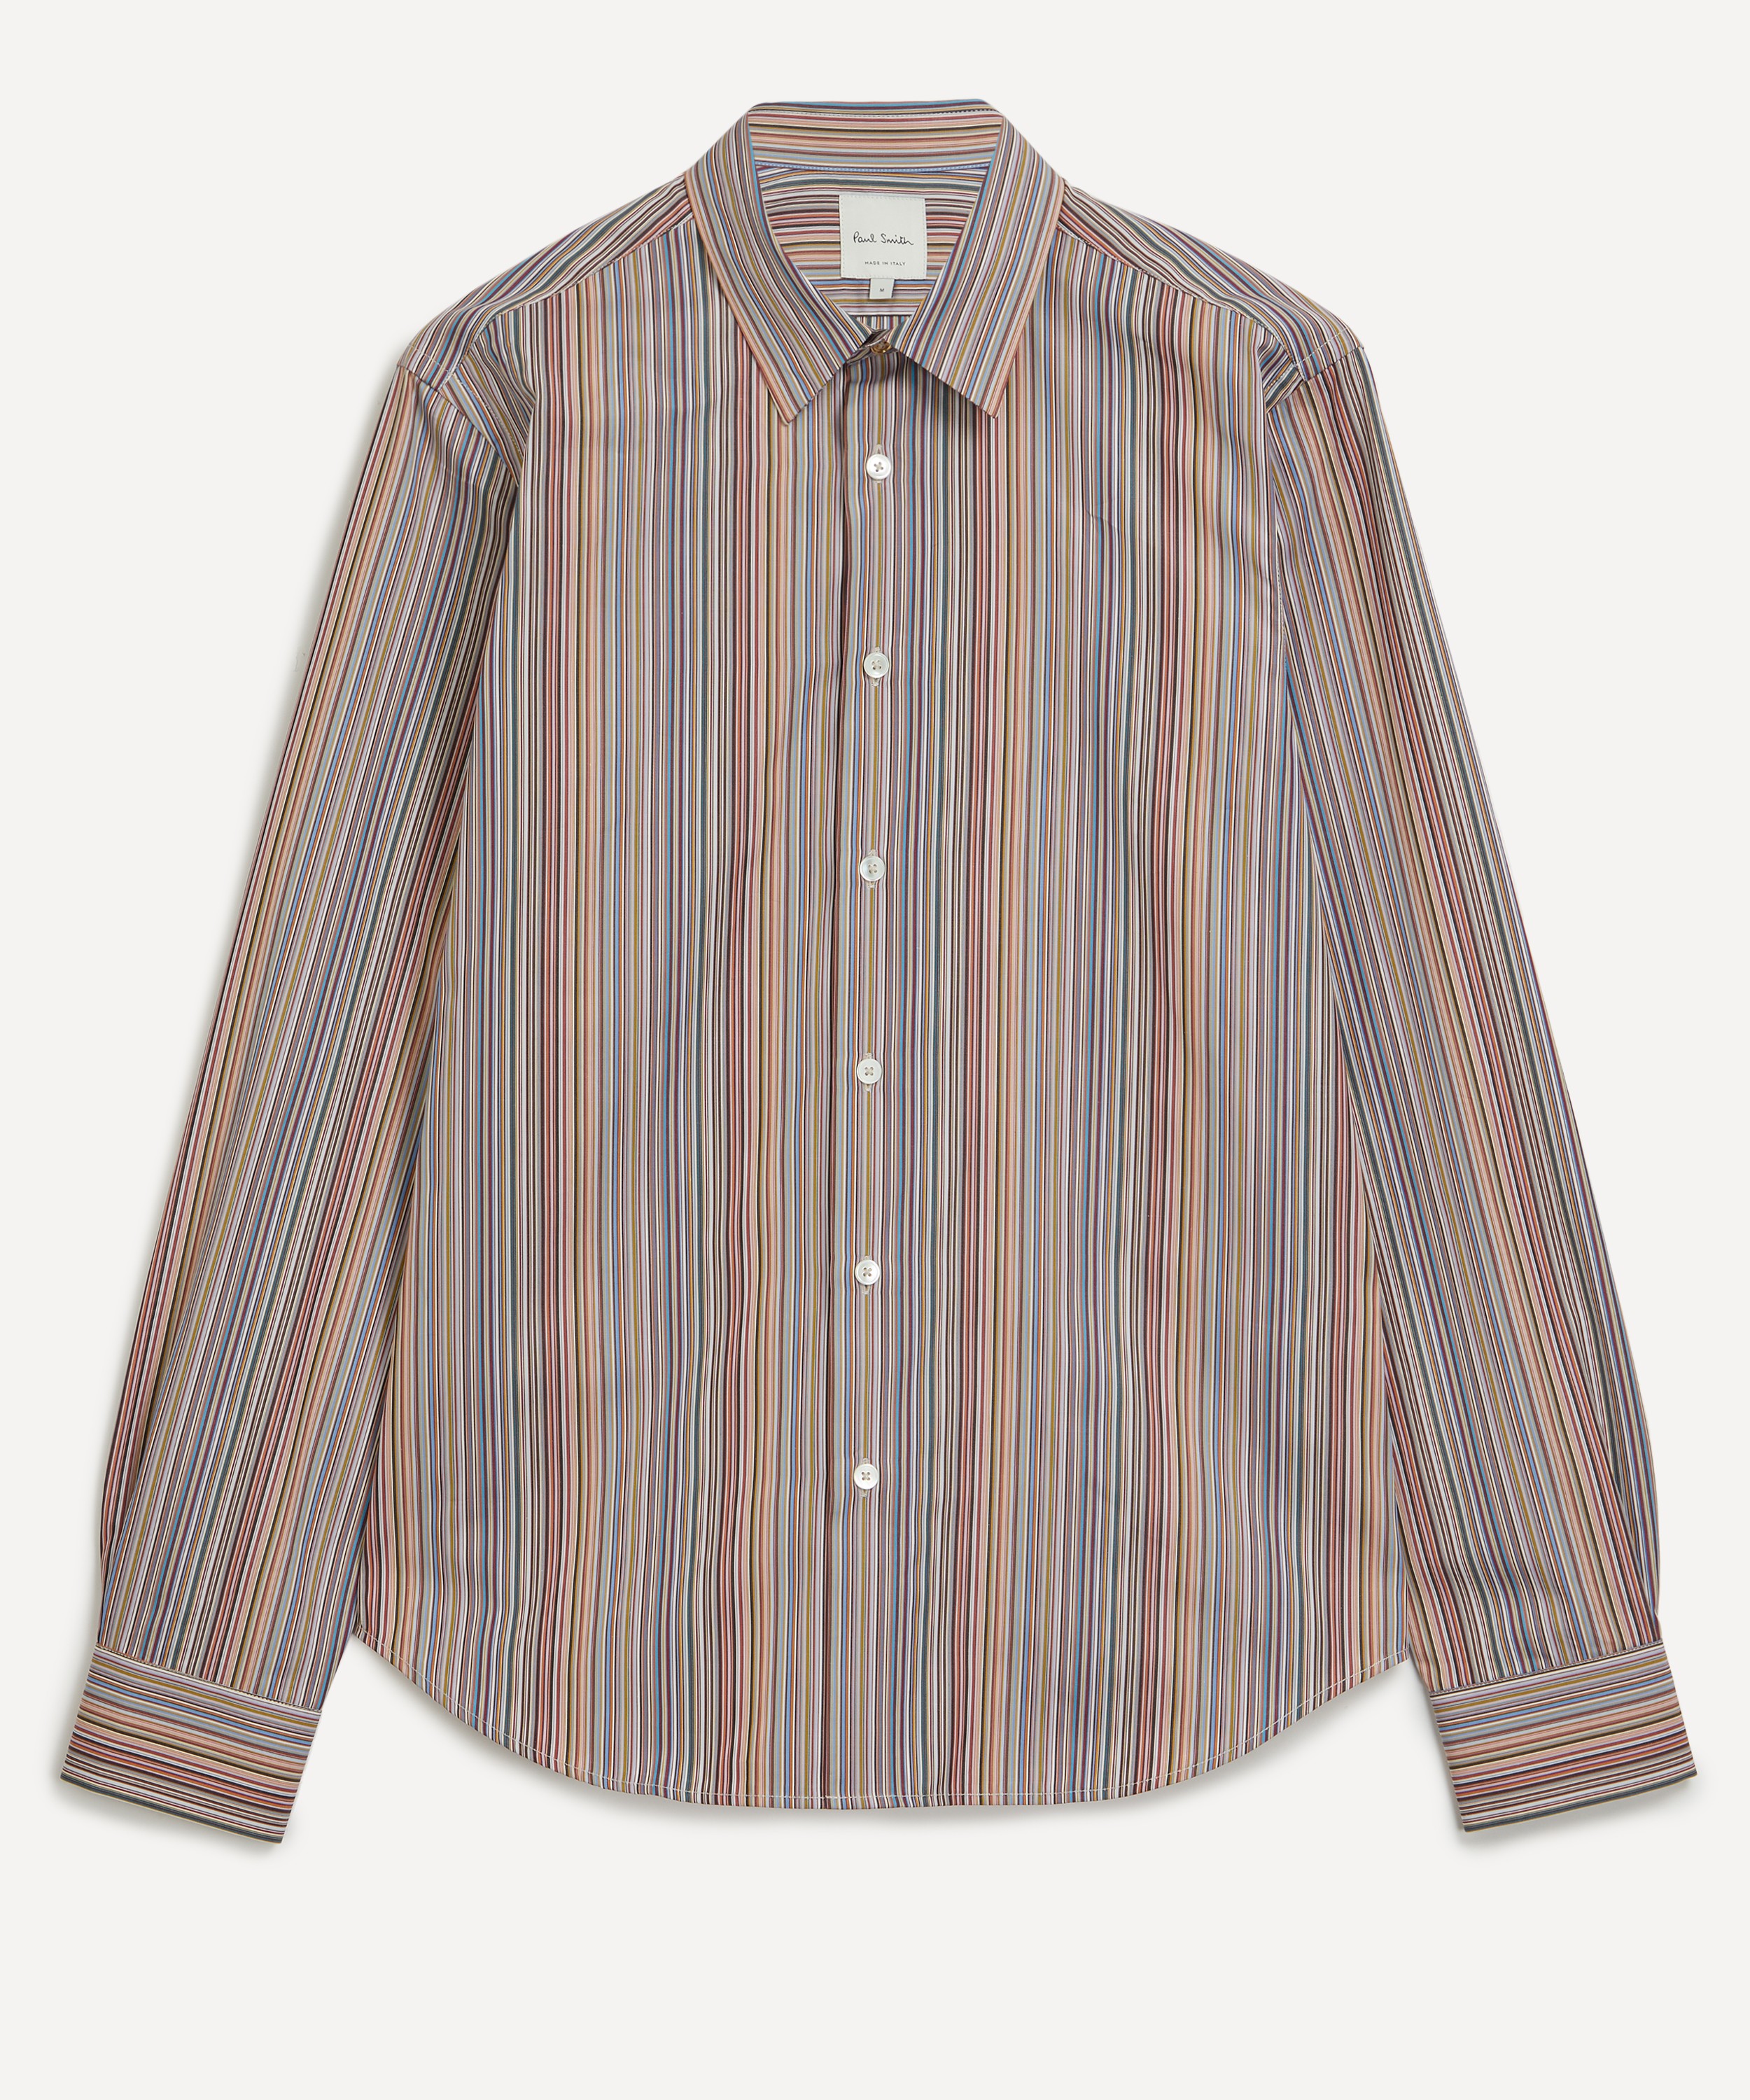 Paul Smith - Artist Stripe Slim Fit Cotton Shirt 